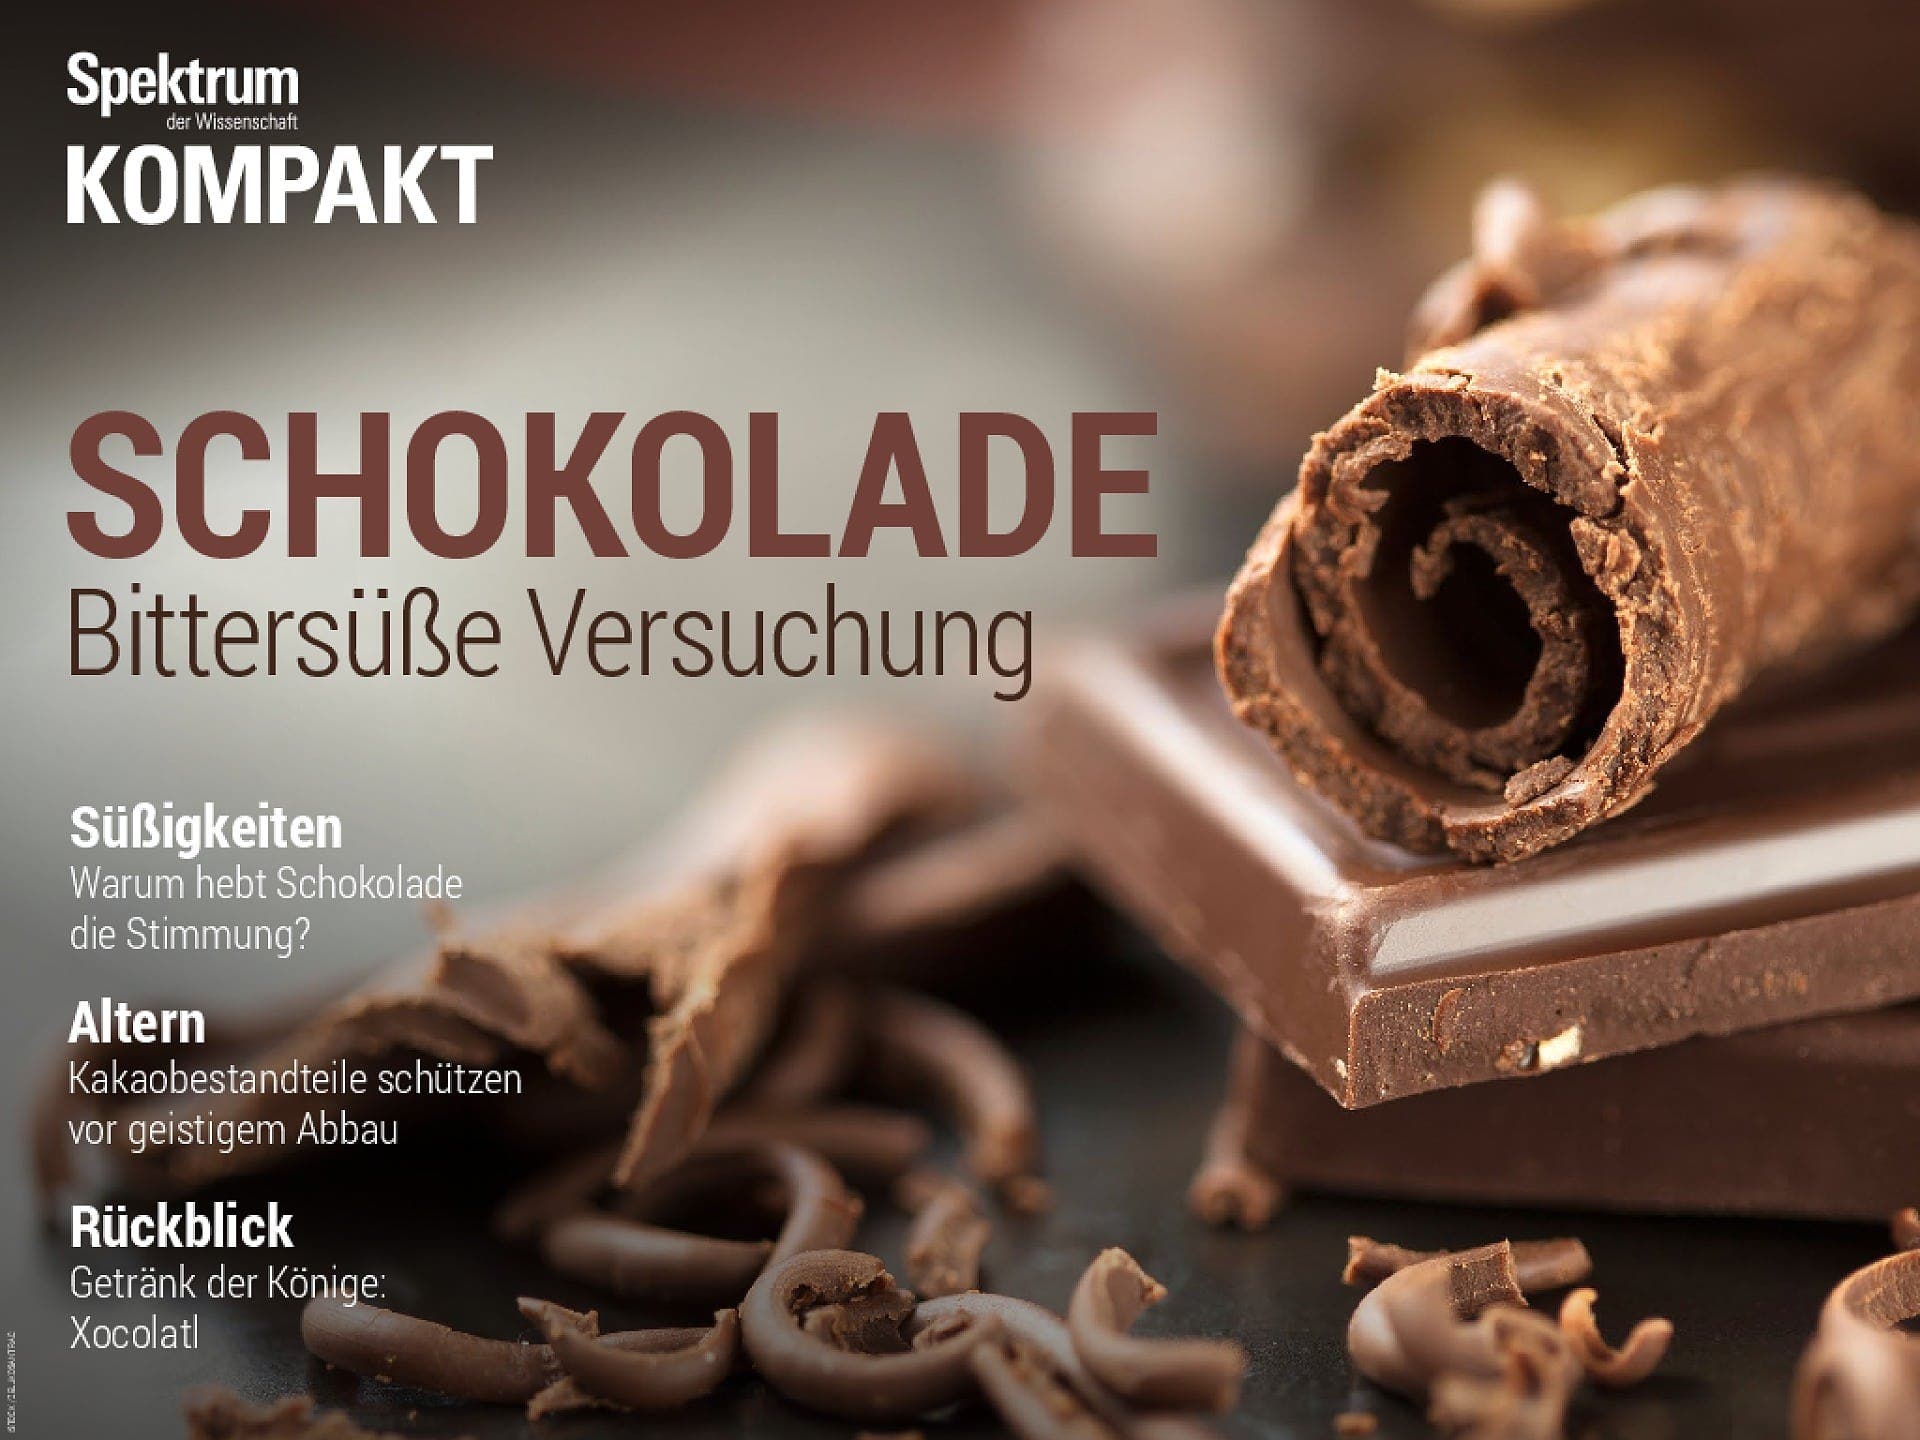 Schokolade - Bittersüße Versuchung